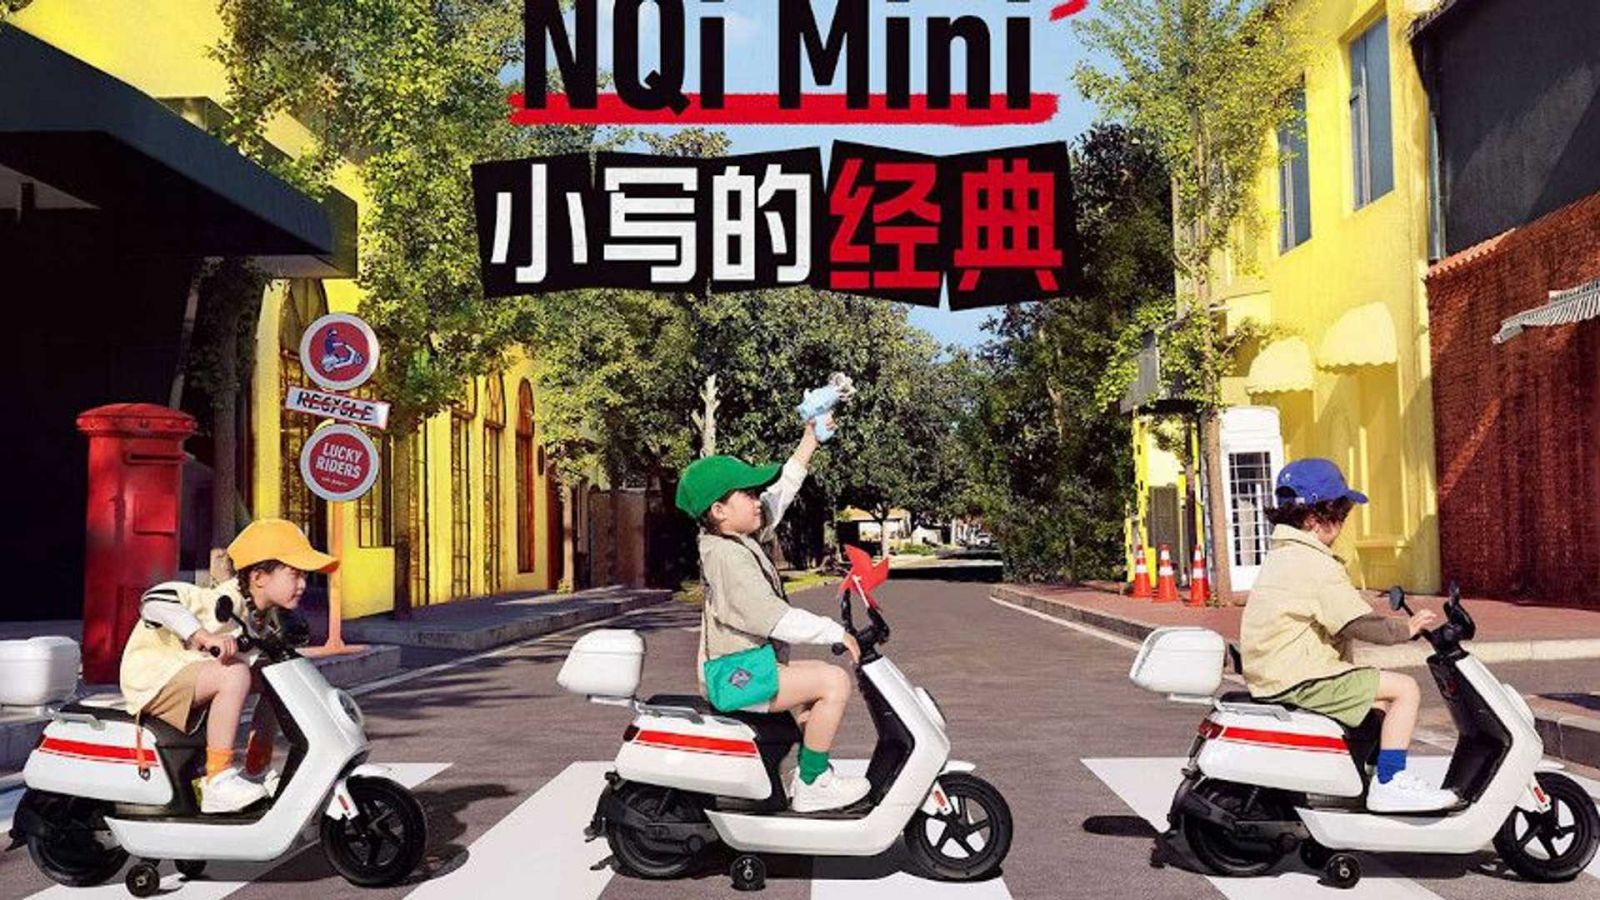 NIU NQi Mini Electric Scooter 